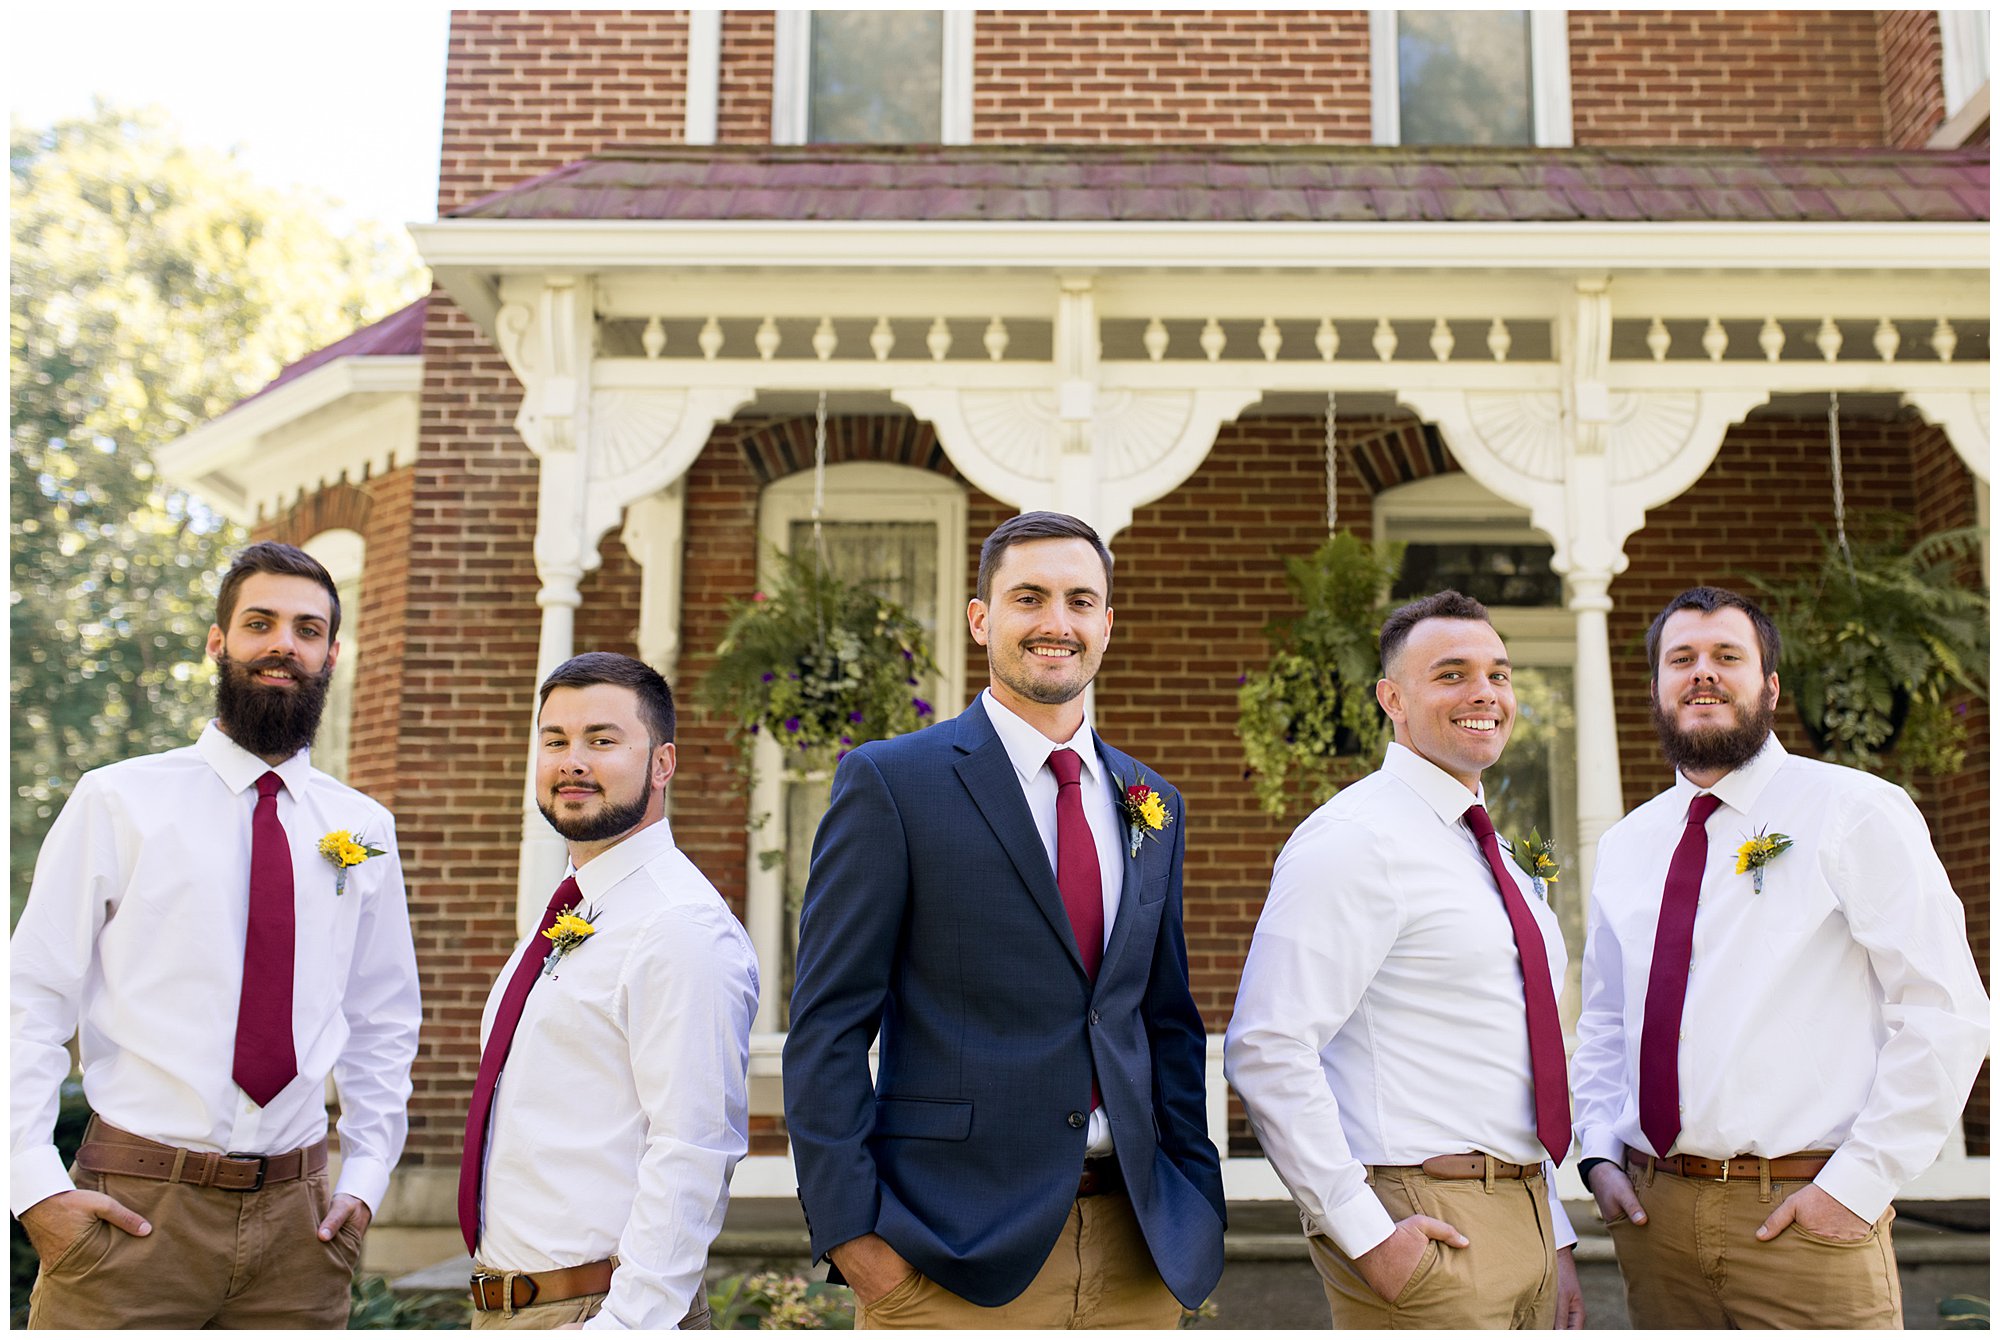 groom and groomsmen at Legacy Barn wedding venue in Kokomo Indiana